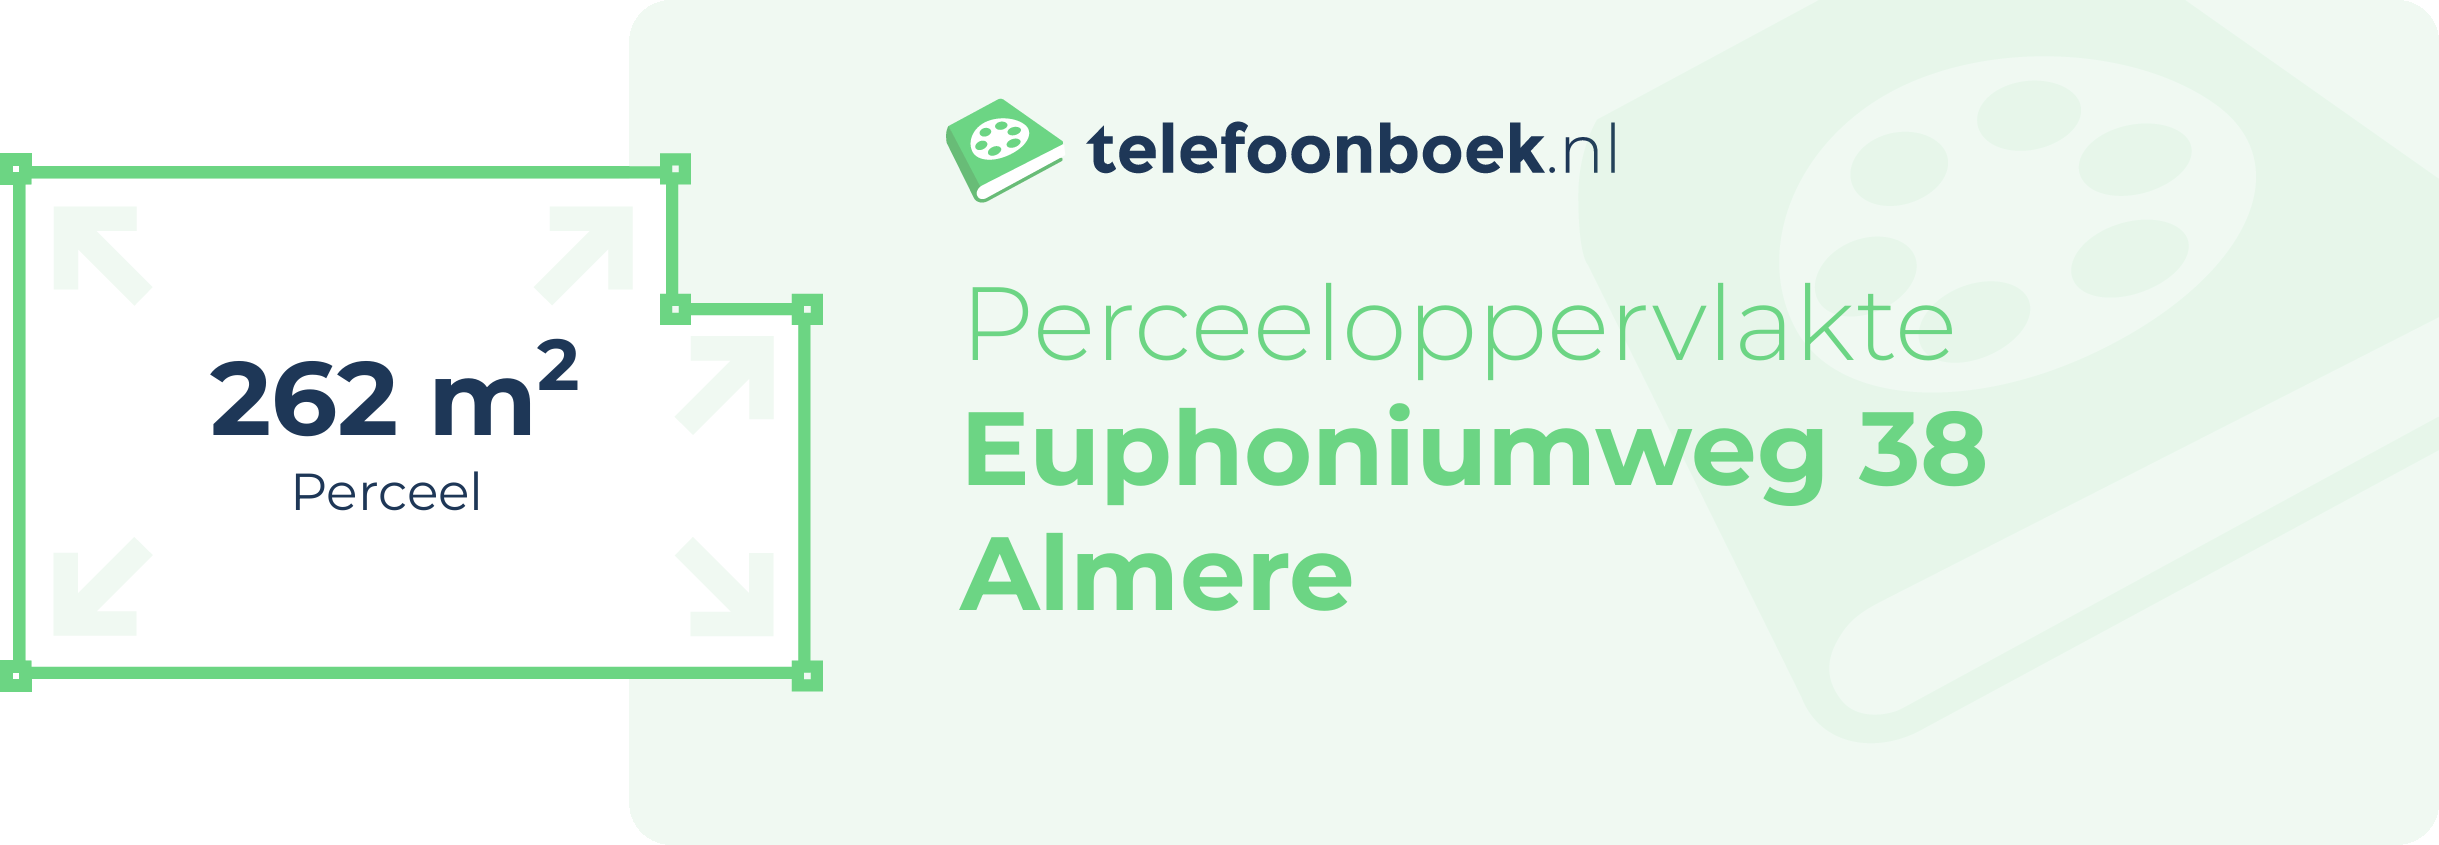 Perceeloppervlakte Euphoniumweg 38 Almere